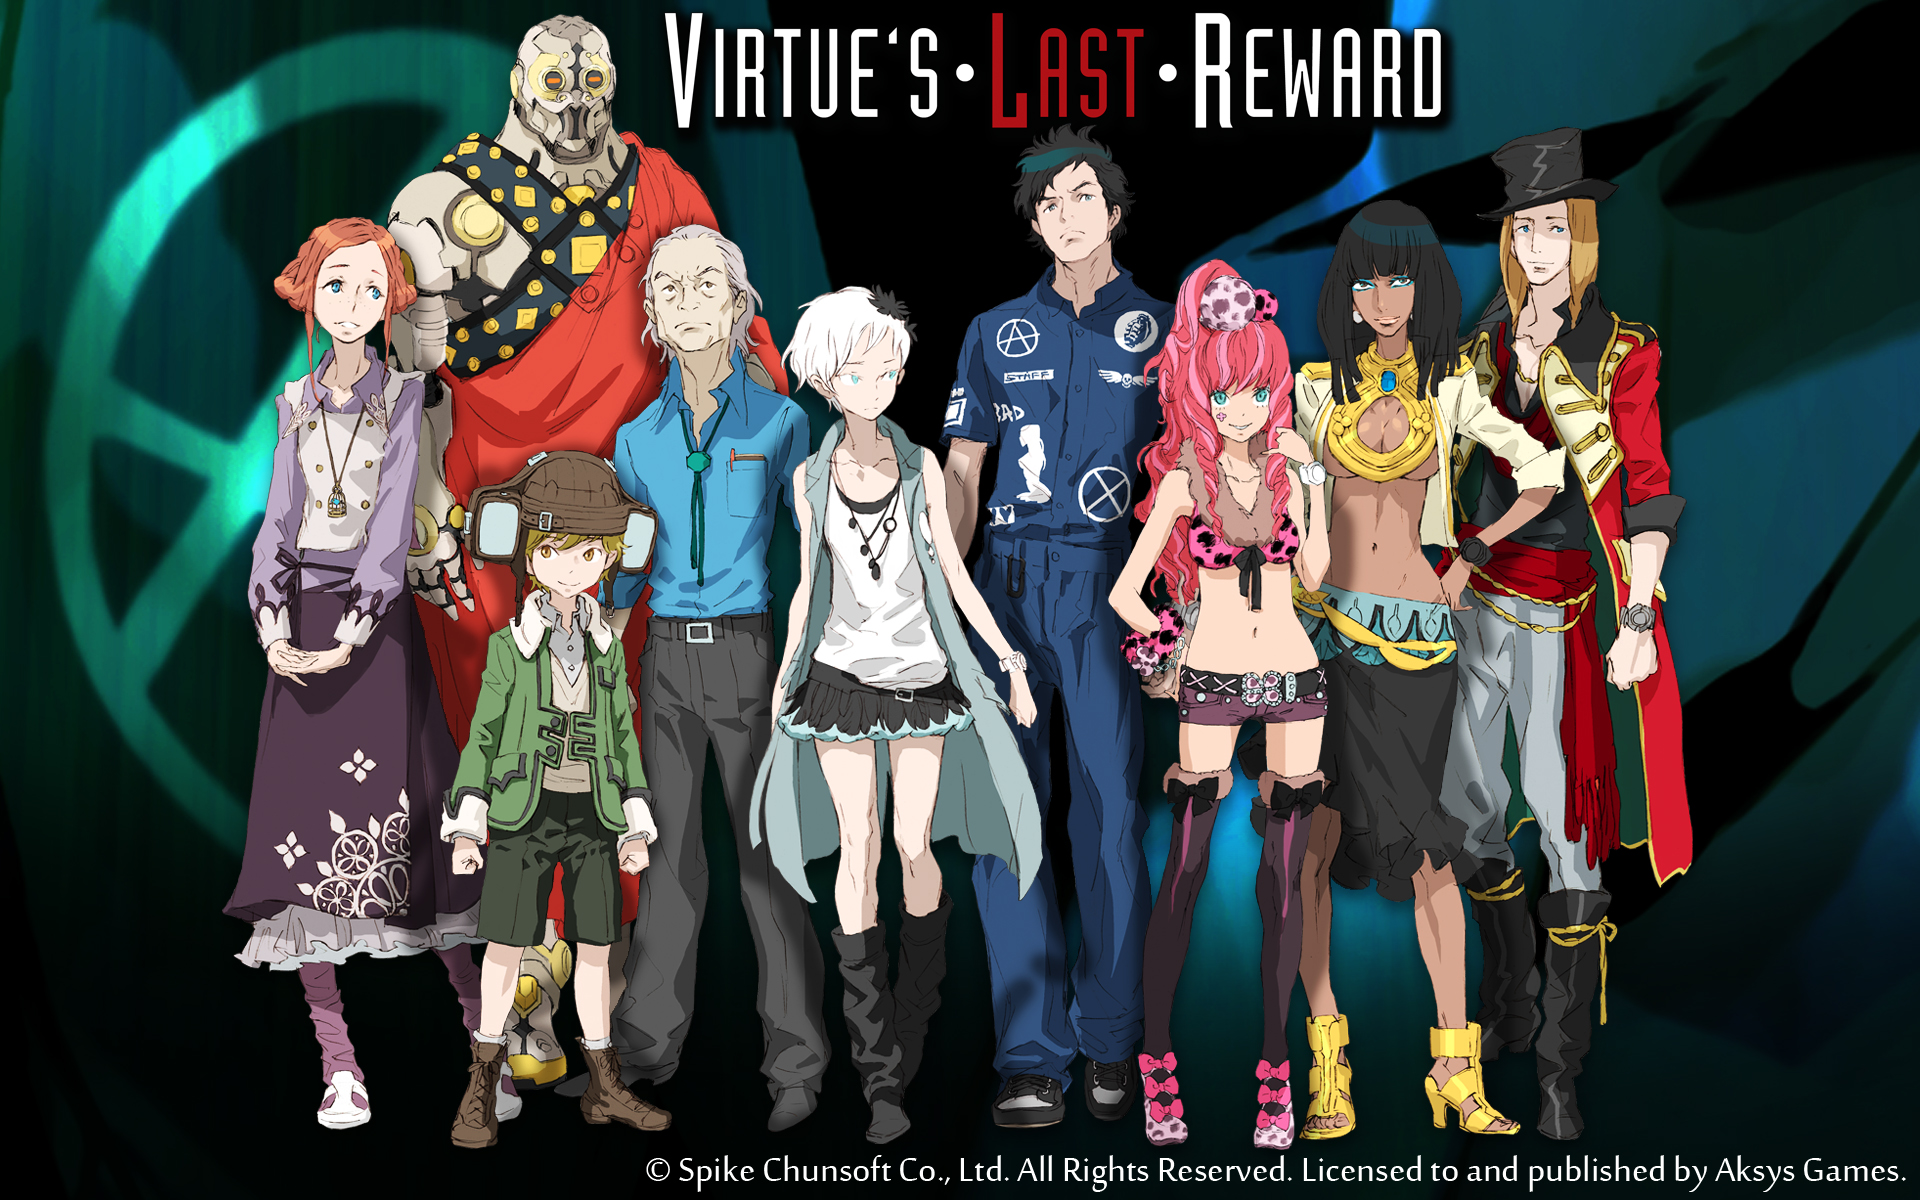 Video Game Virtue's Last Reward HD Wallpaper | Background Image